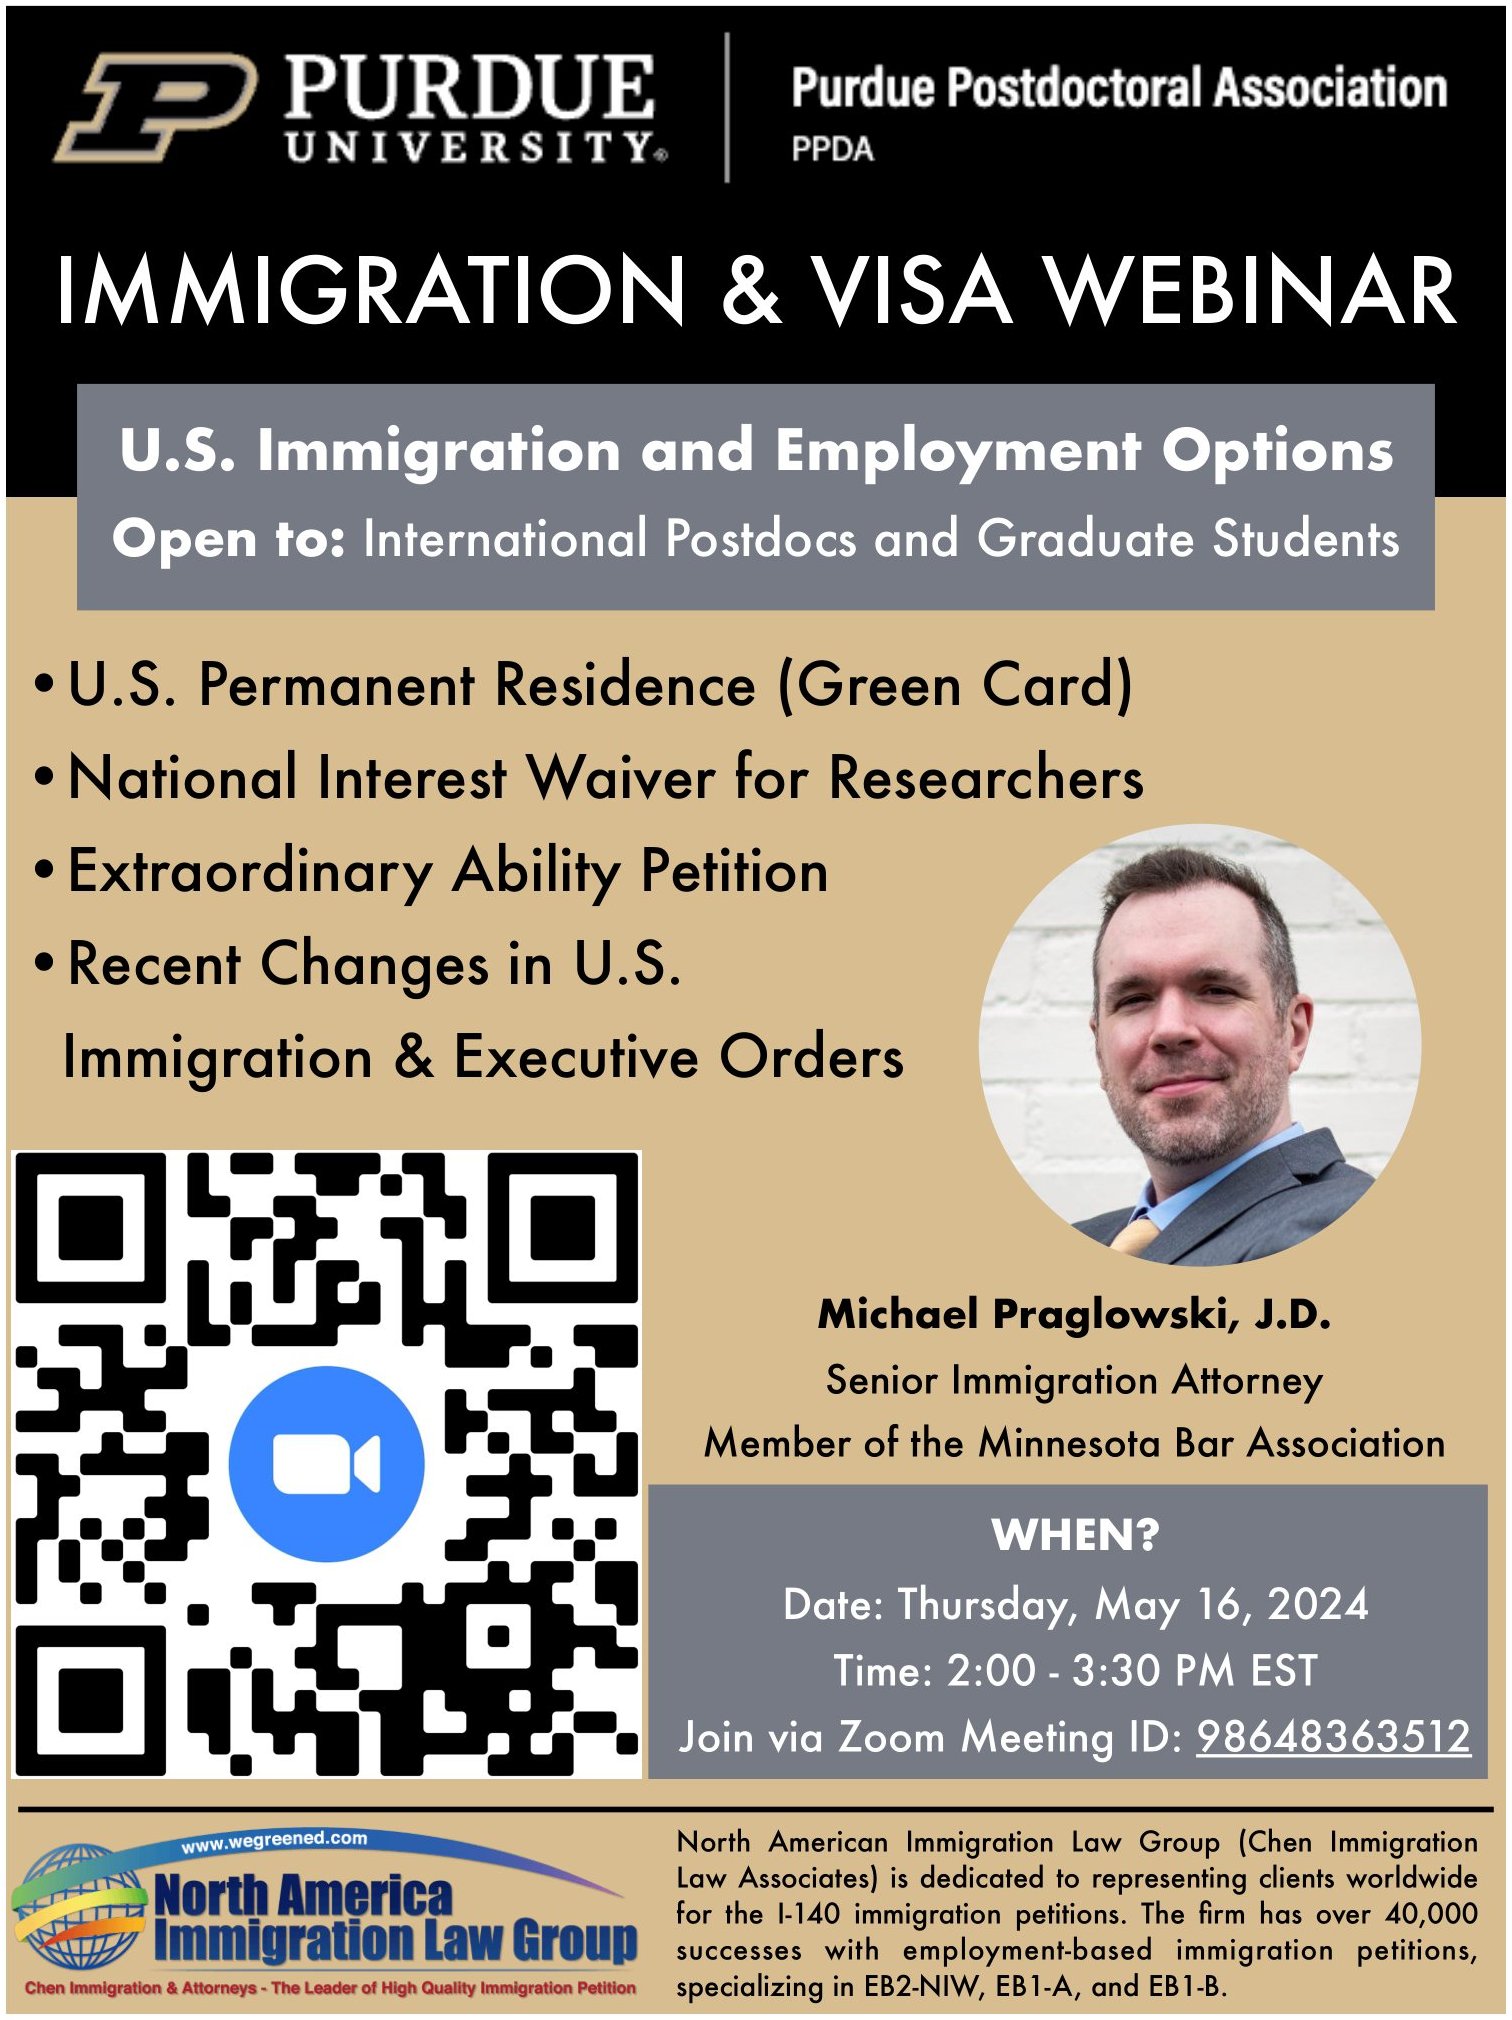 PPDA-Immigration-Webinar-Flyer.jpg